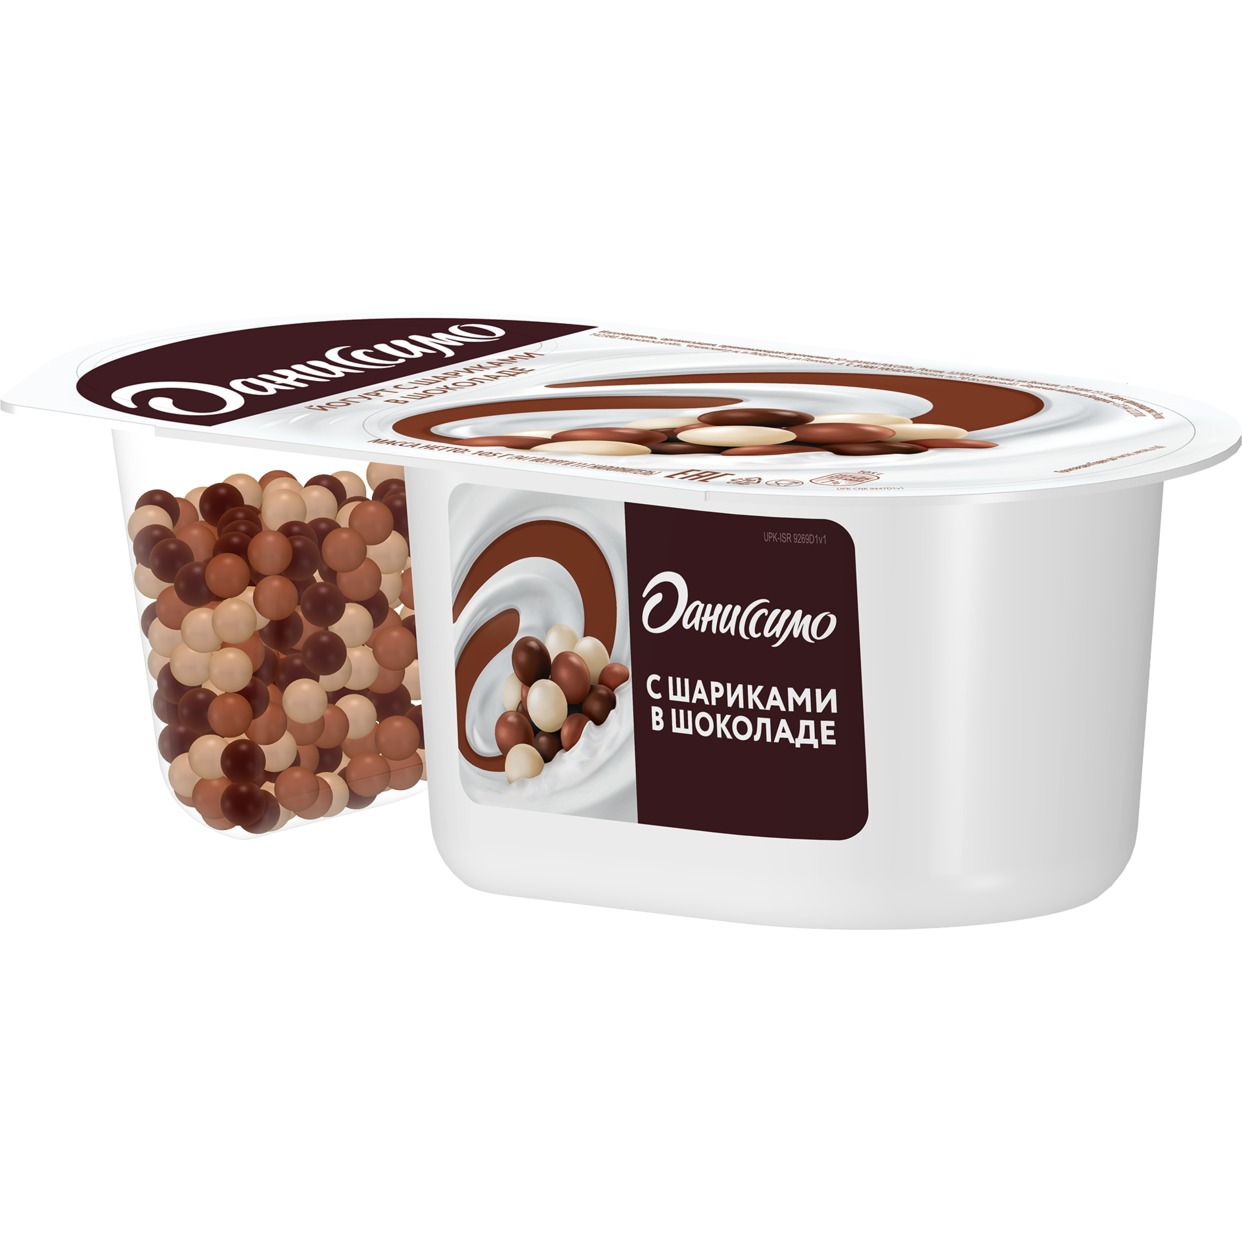 Йогурт "Даниссимо" Фантазия с хрустящими шариками в шоколаде 6.9% 105г по акции в Пятерочке